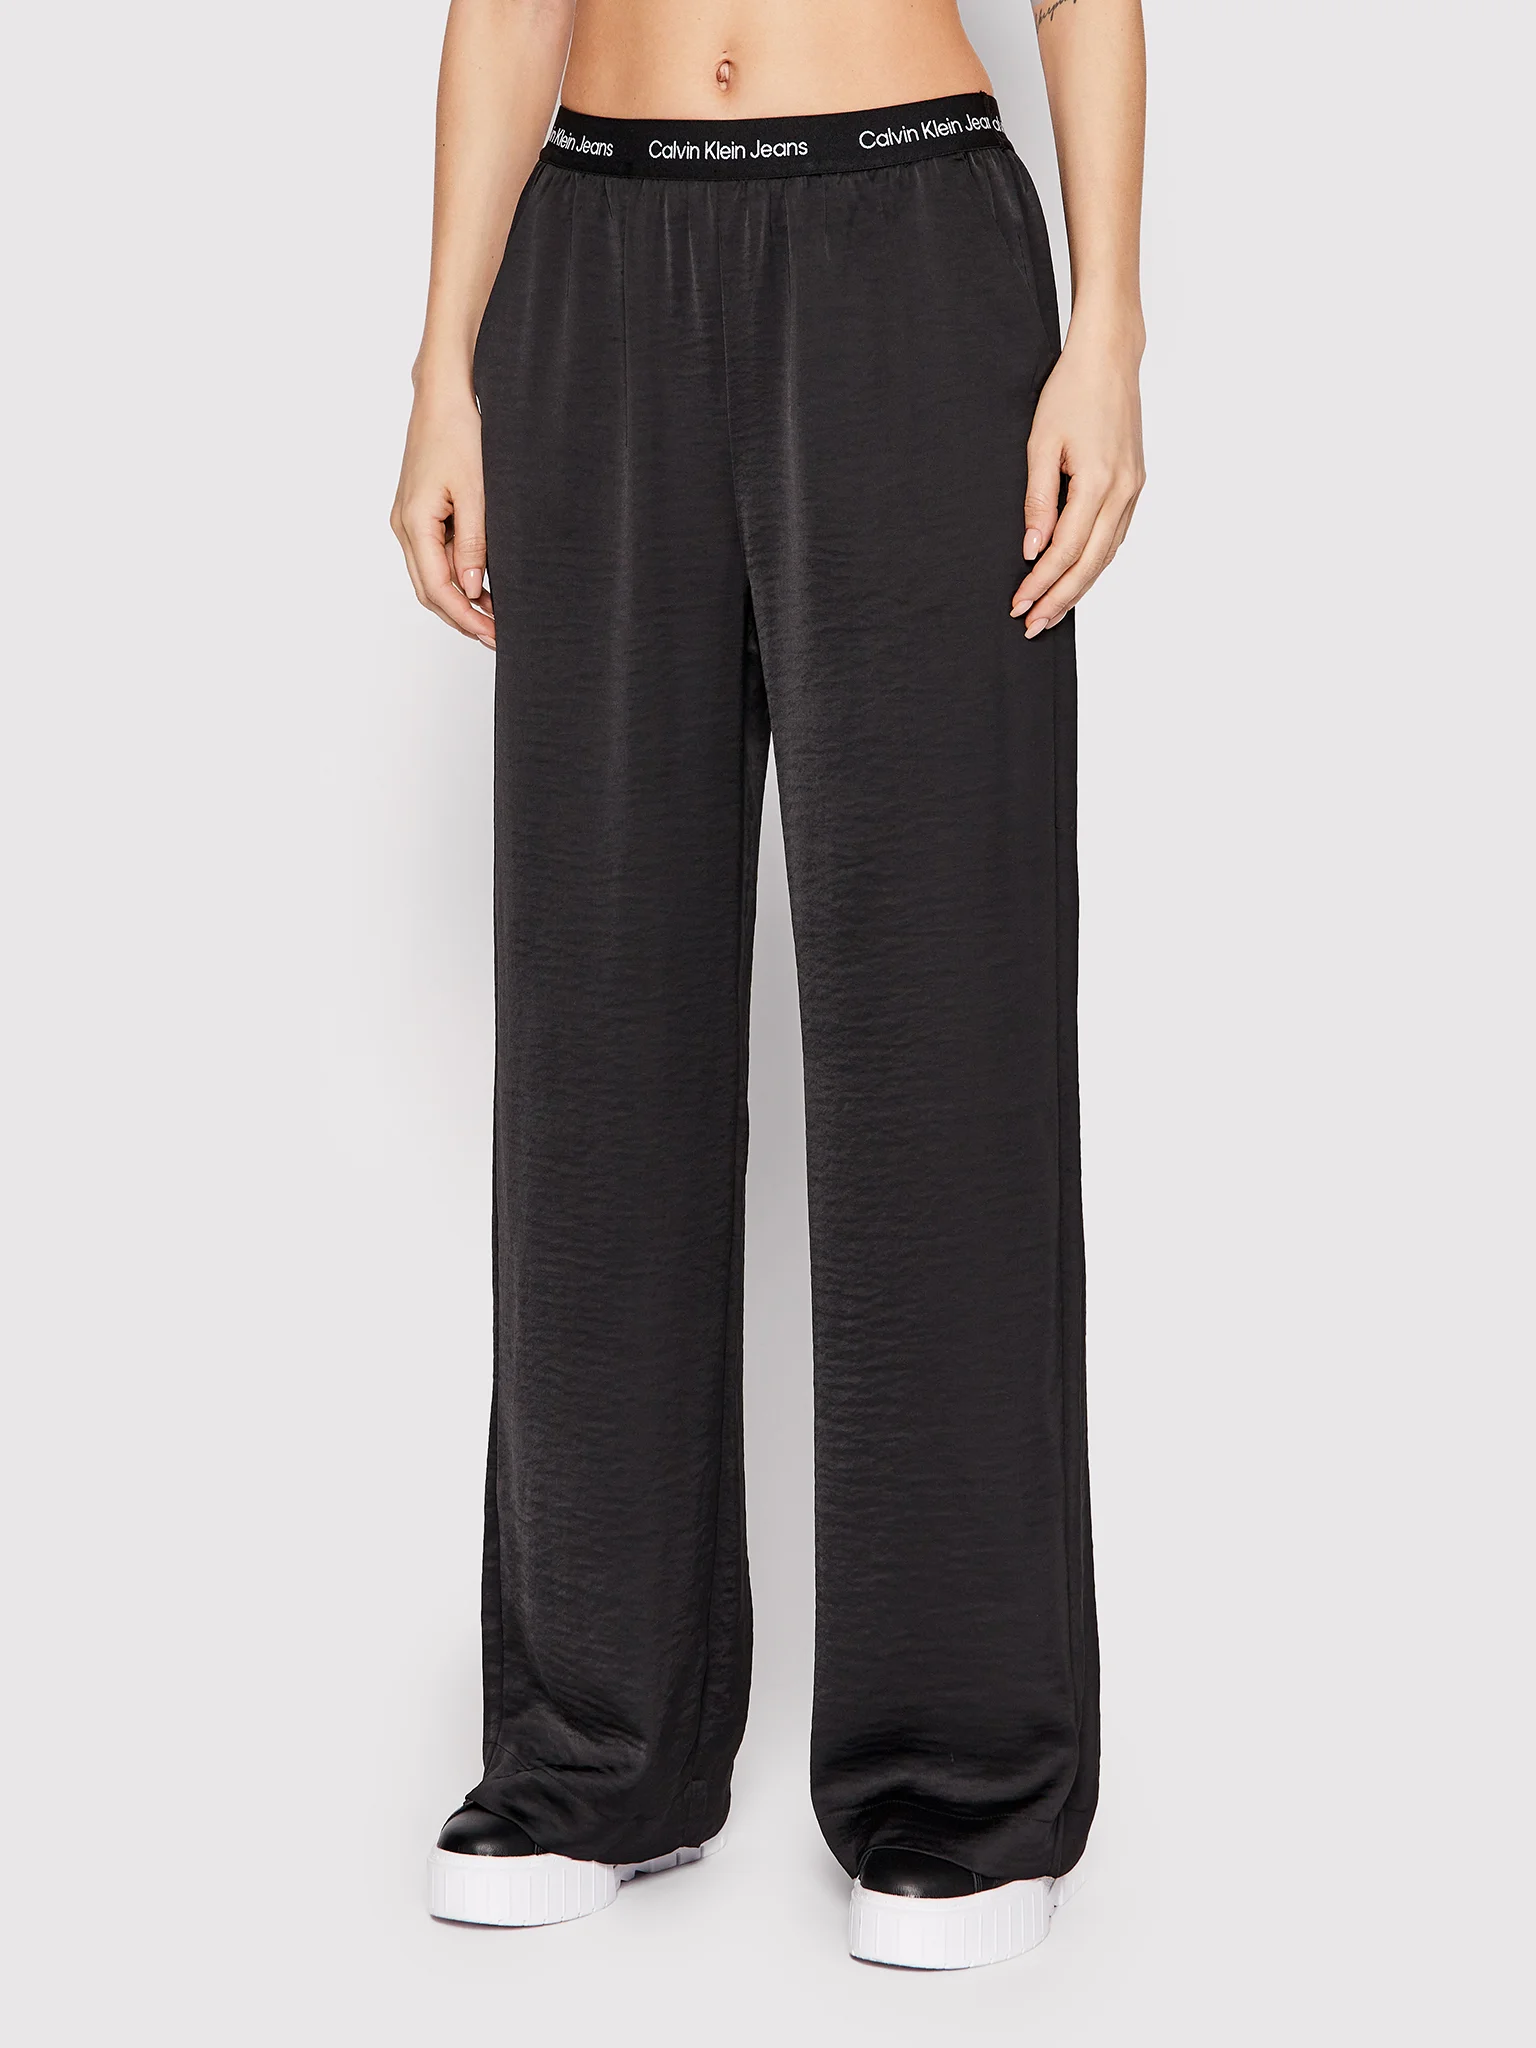 - dstore relaxed pants waistband wide Calvin Klein women online logo - leg Jeans - fit